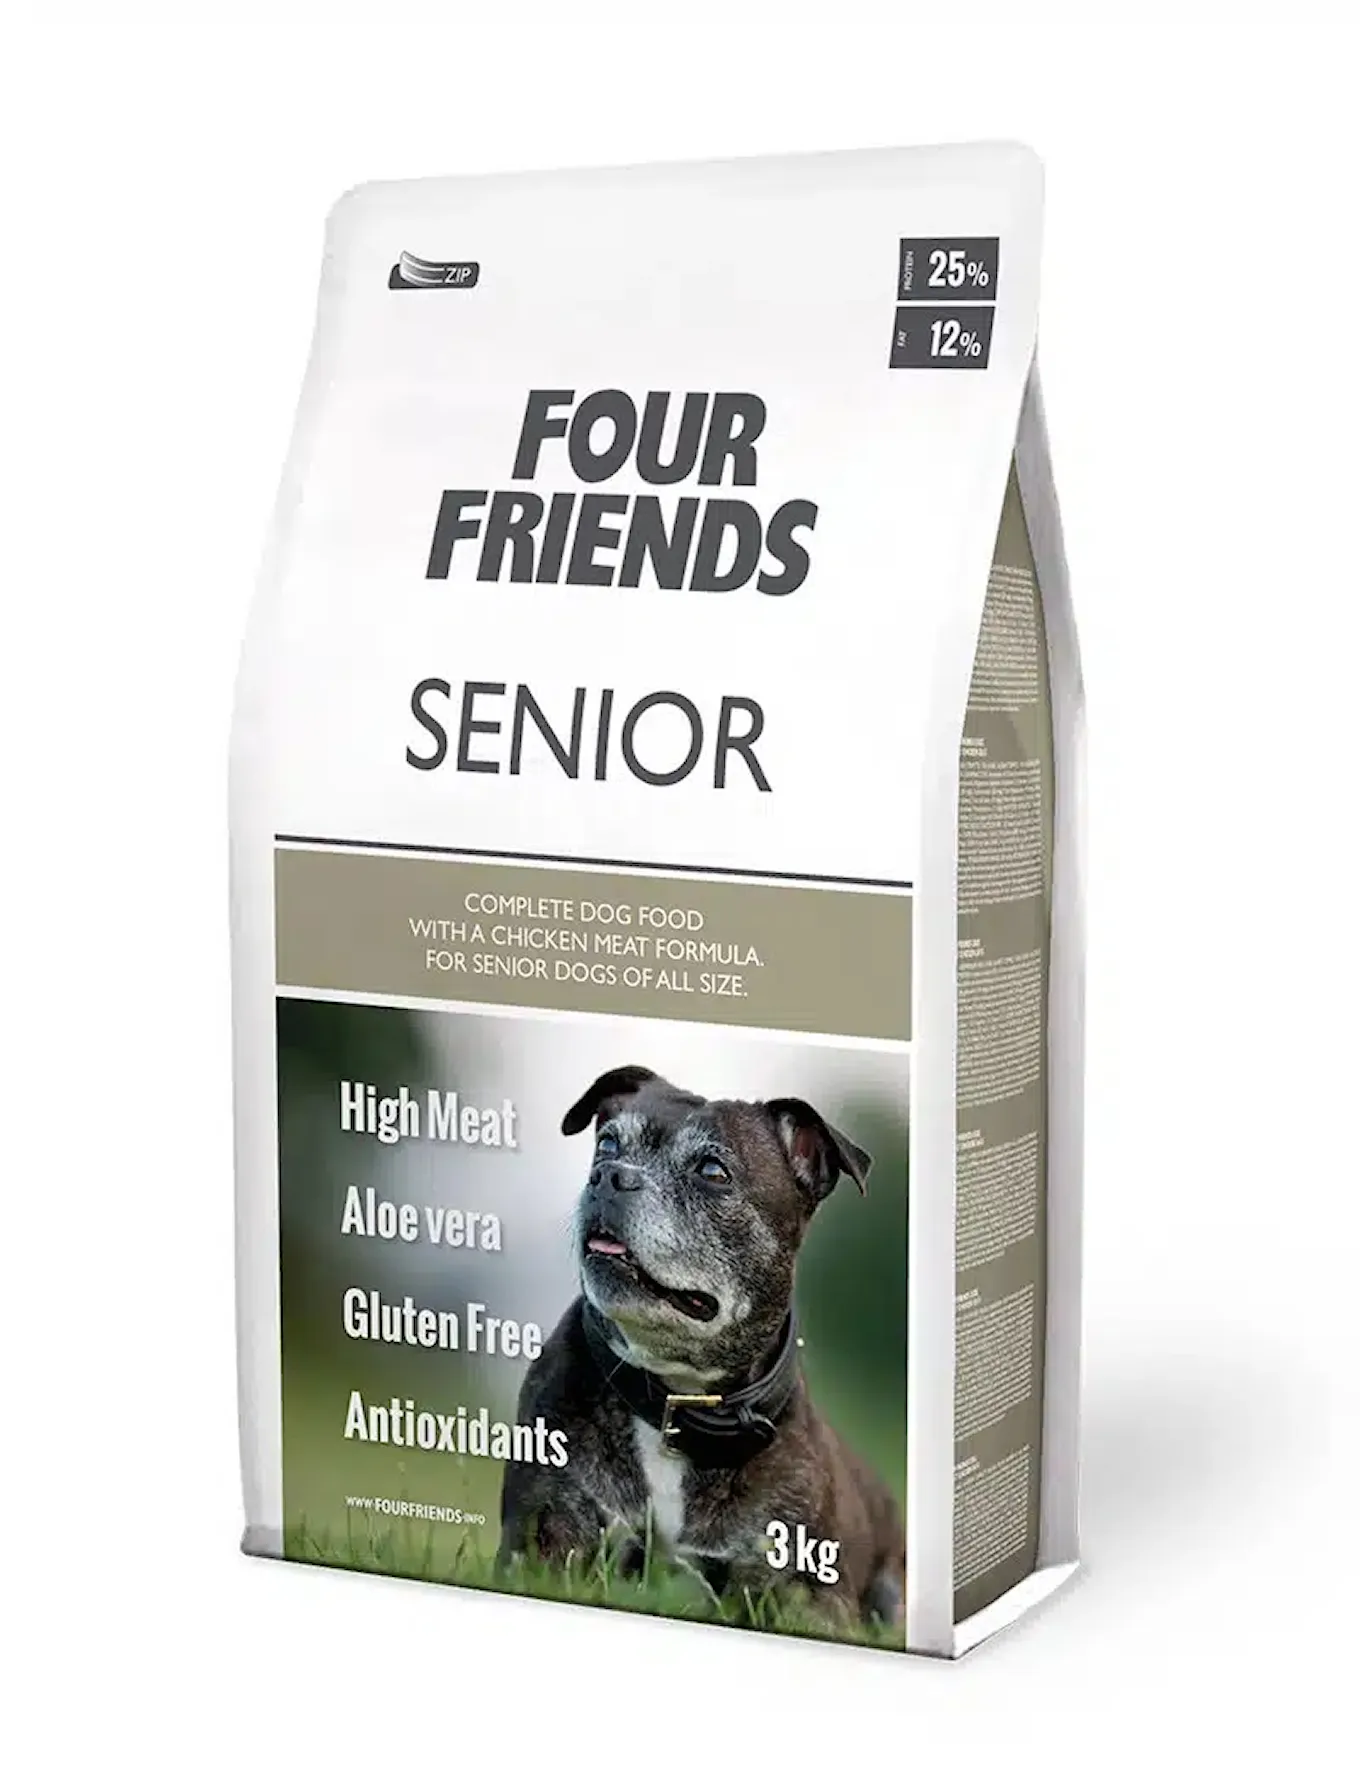 fourfriends_dogfood_drykibbles_senior_newlook_003.